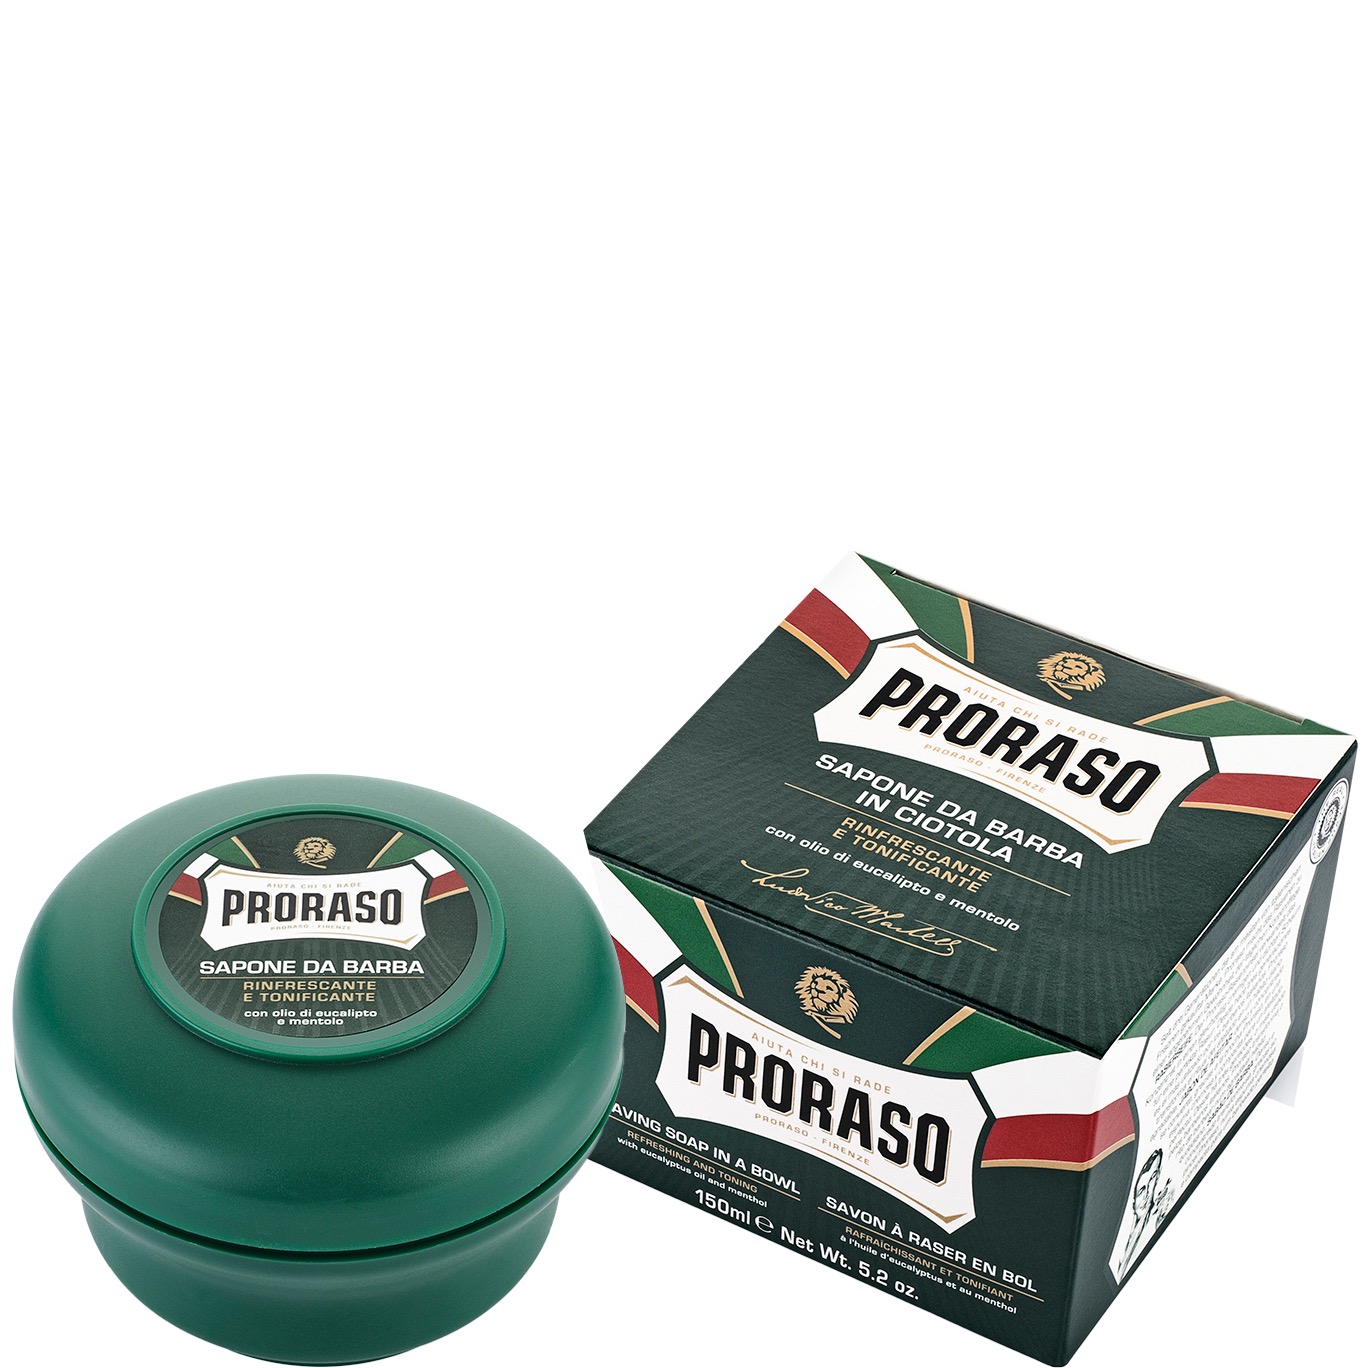 Proraso Scheerzeep Traditional pot Original 150ml - 1.1 - PRO-400620